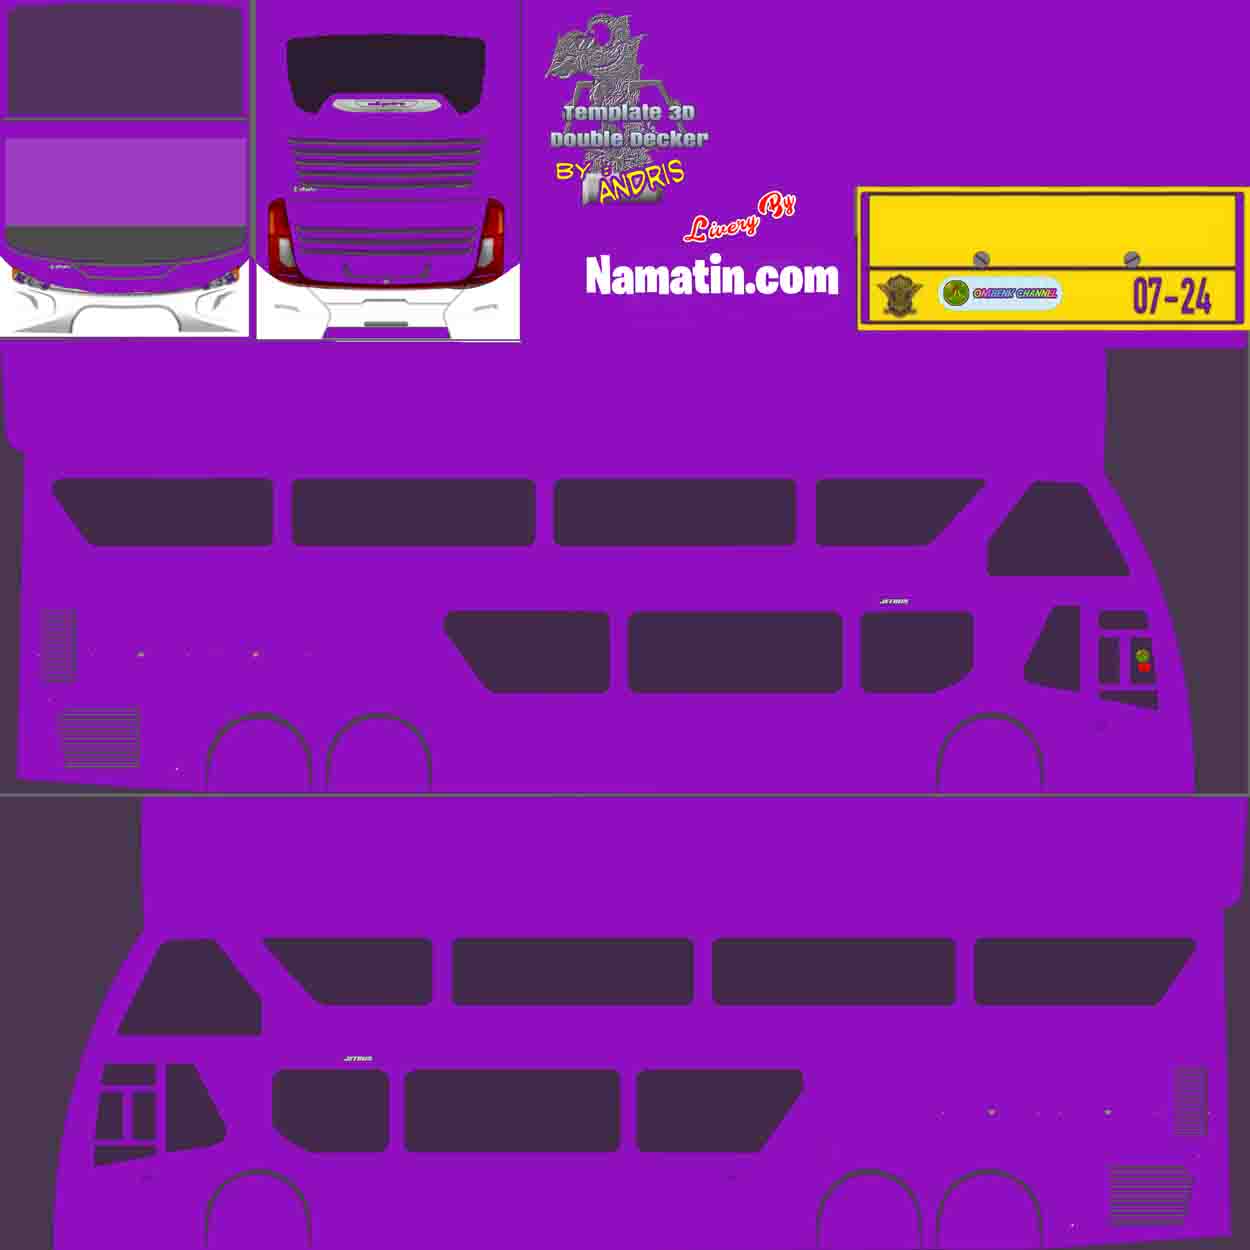 livery bussid hd warna ungu